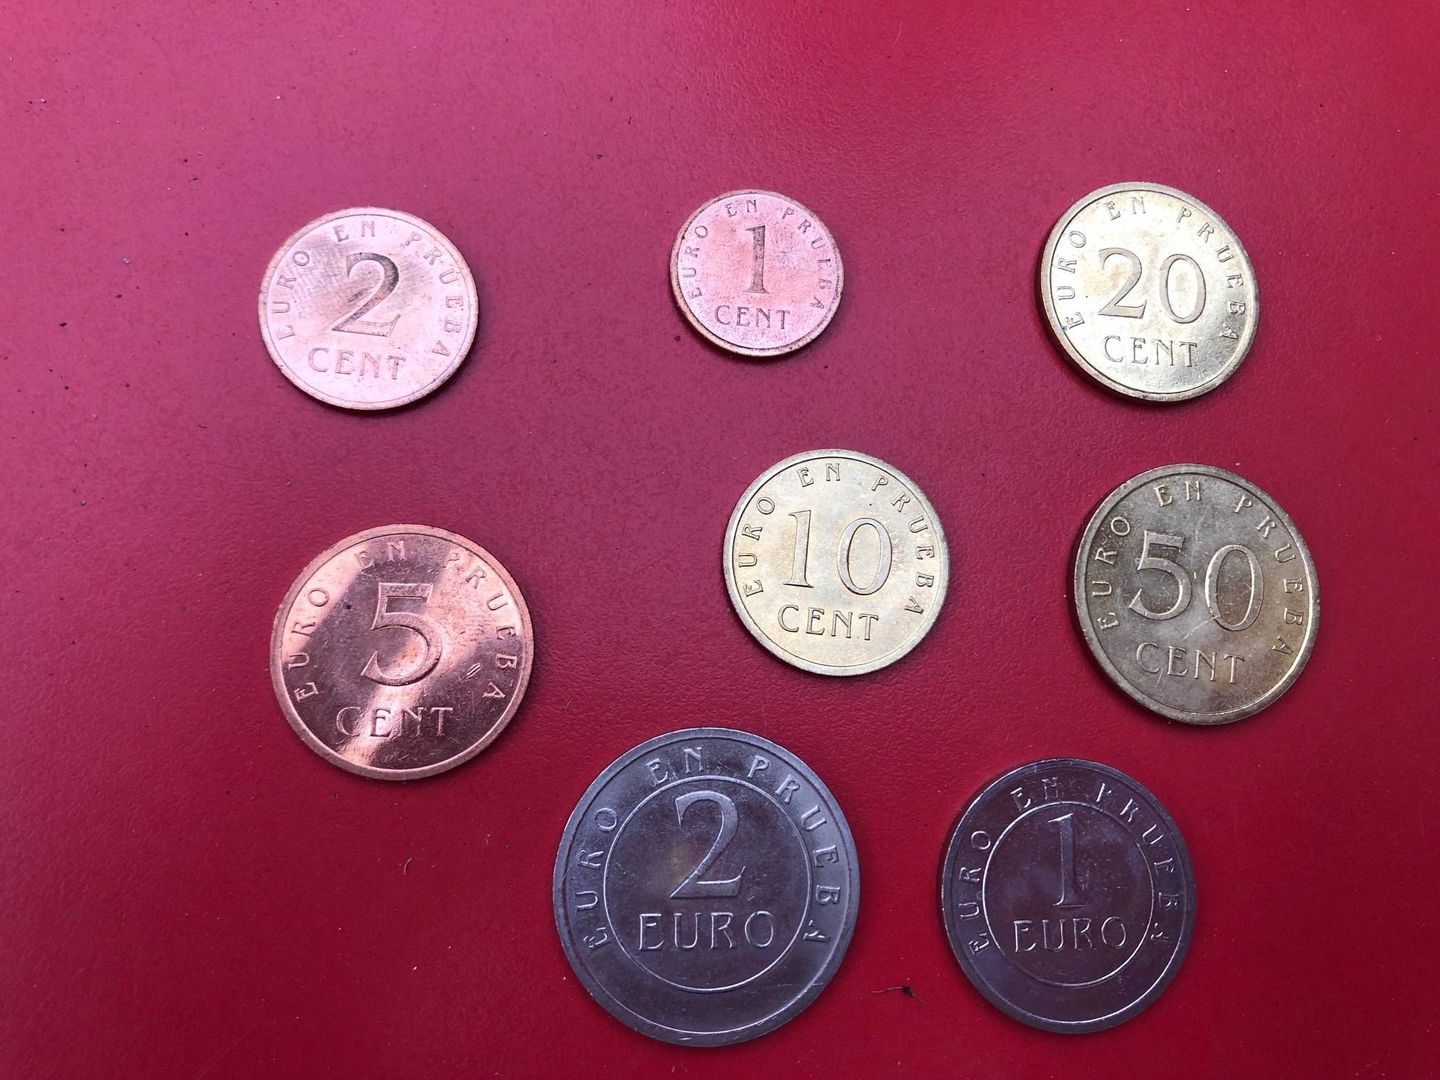 Colección de monedas del euro de 1998 en Churriana.